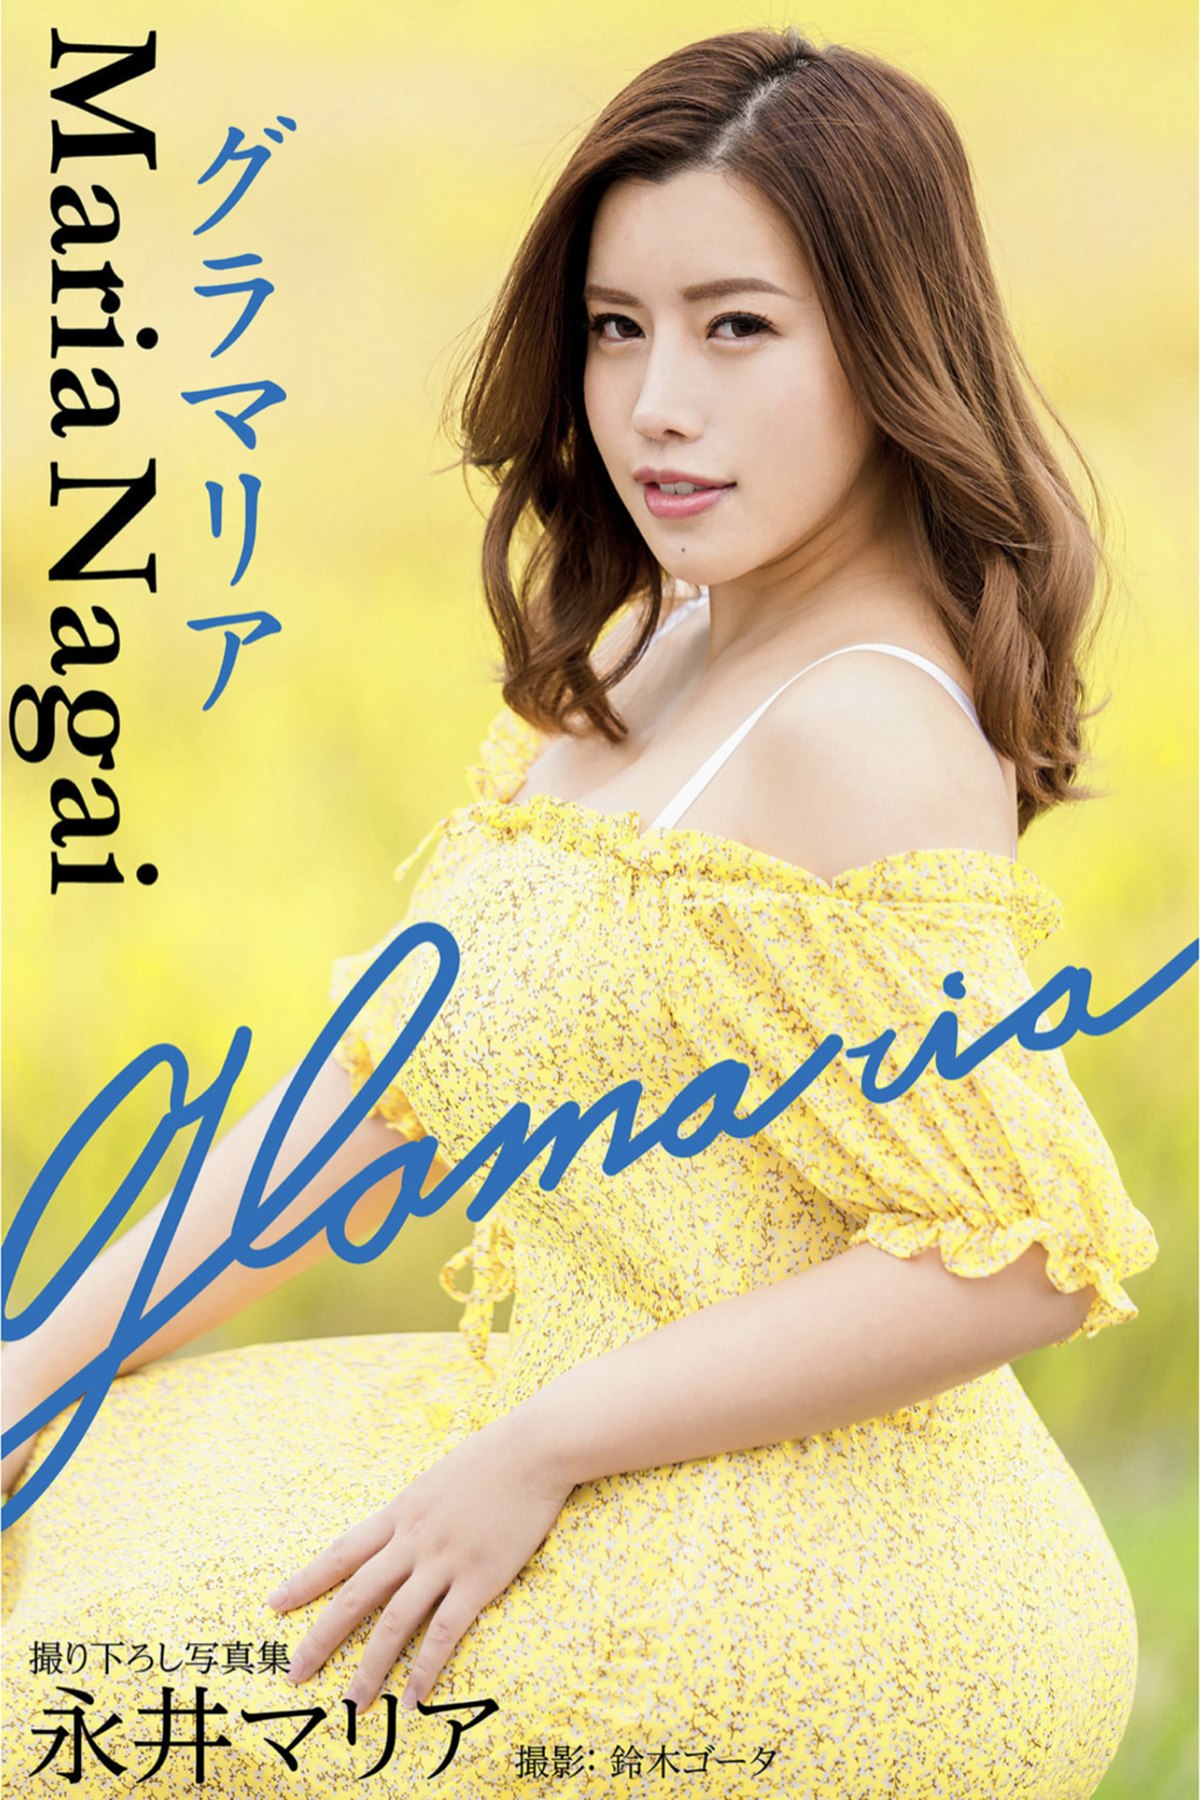 Photobook-グラマリア-Nagai-Maria-井マリア-Gravure-Photobook-0000-6376228122.jpg